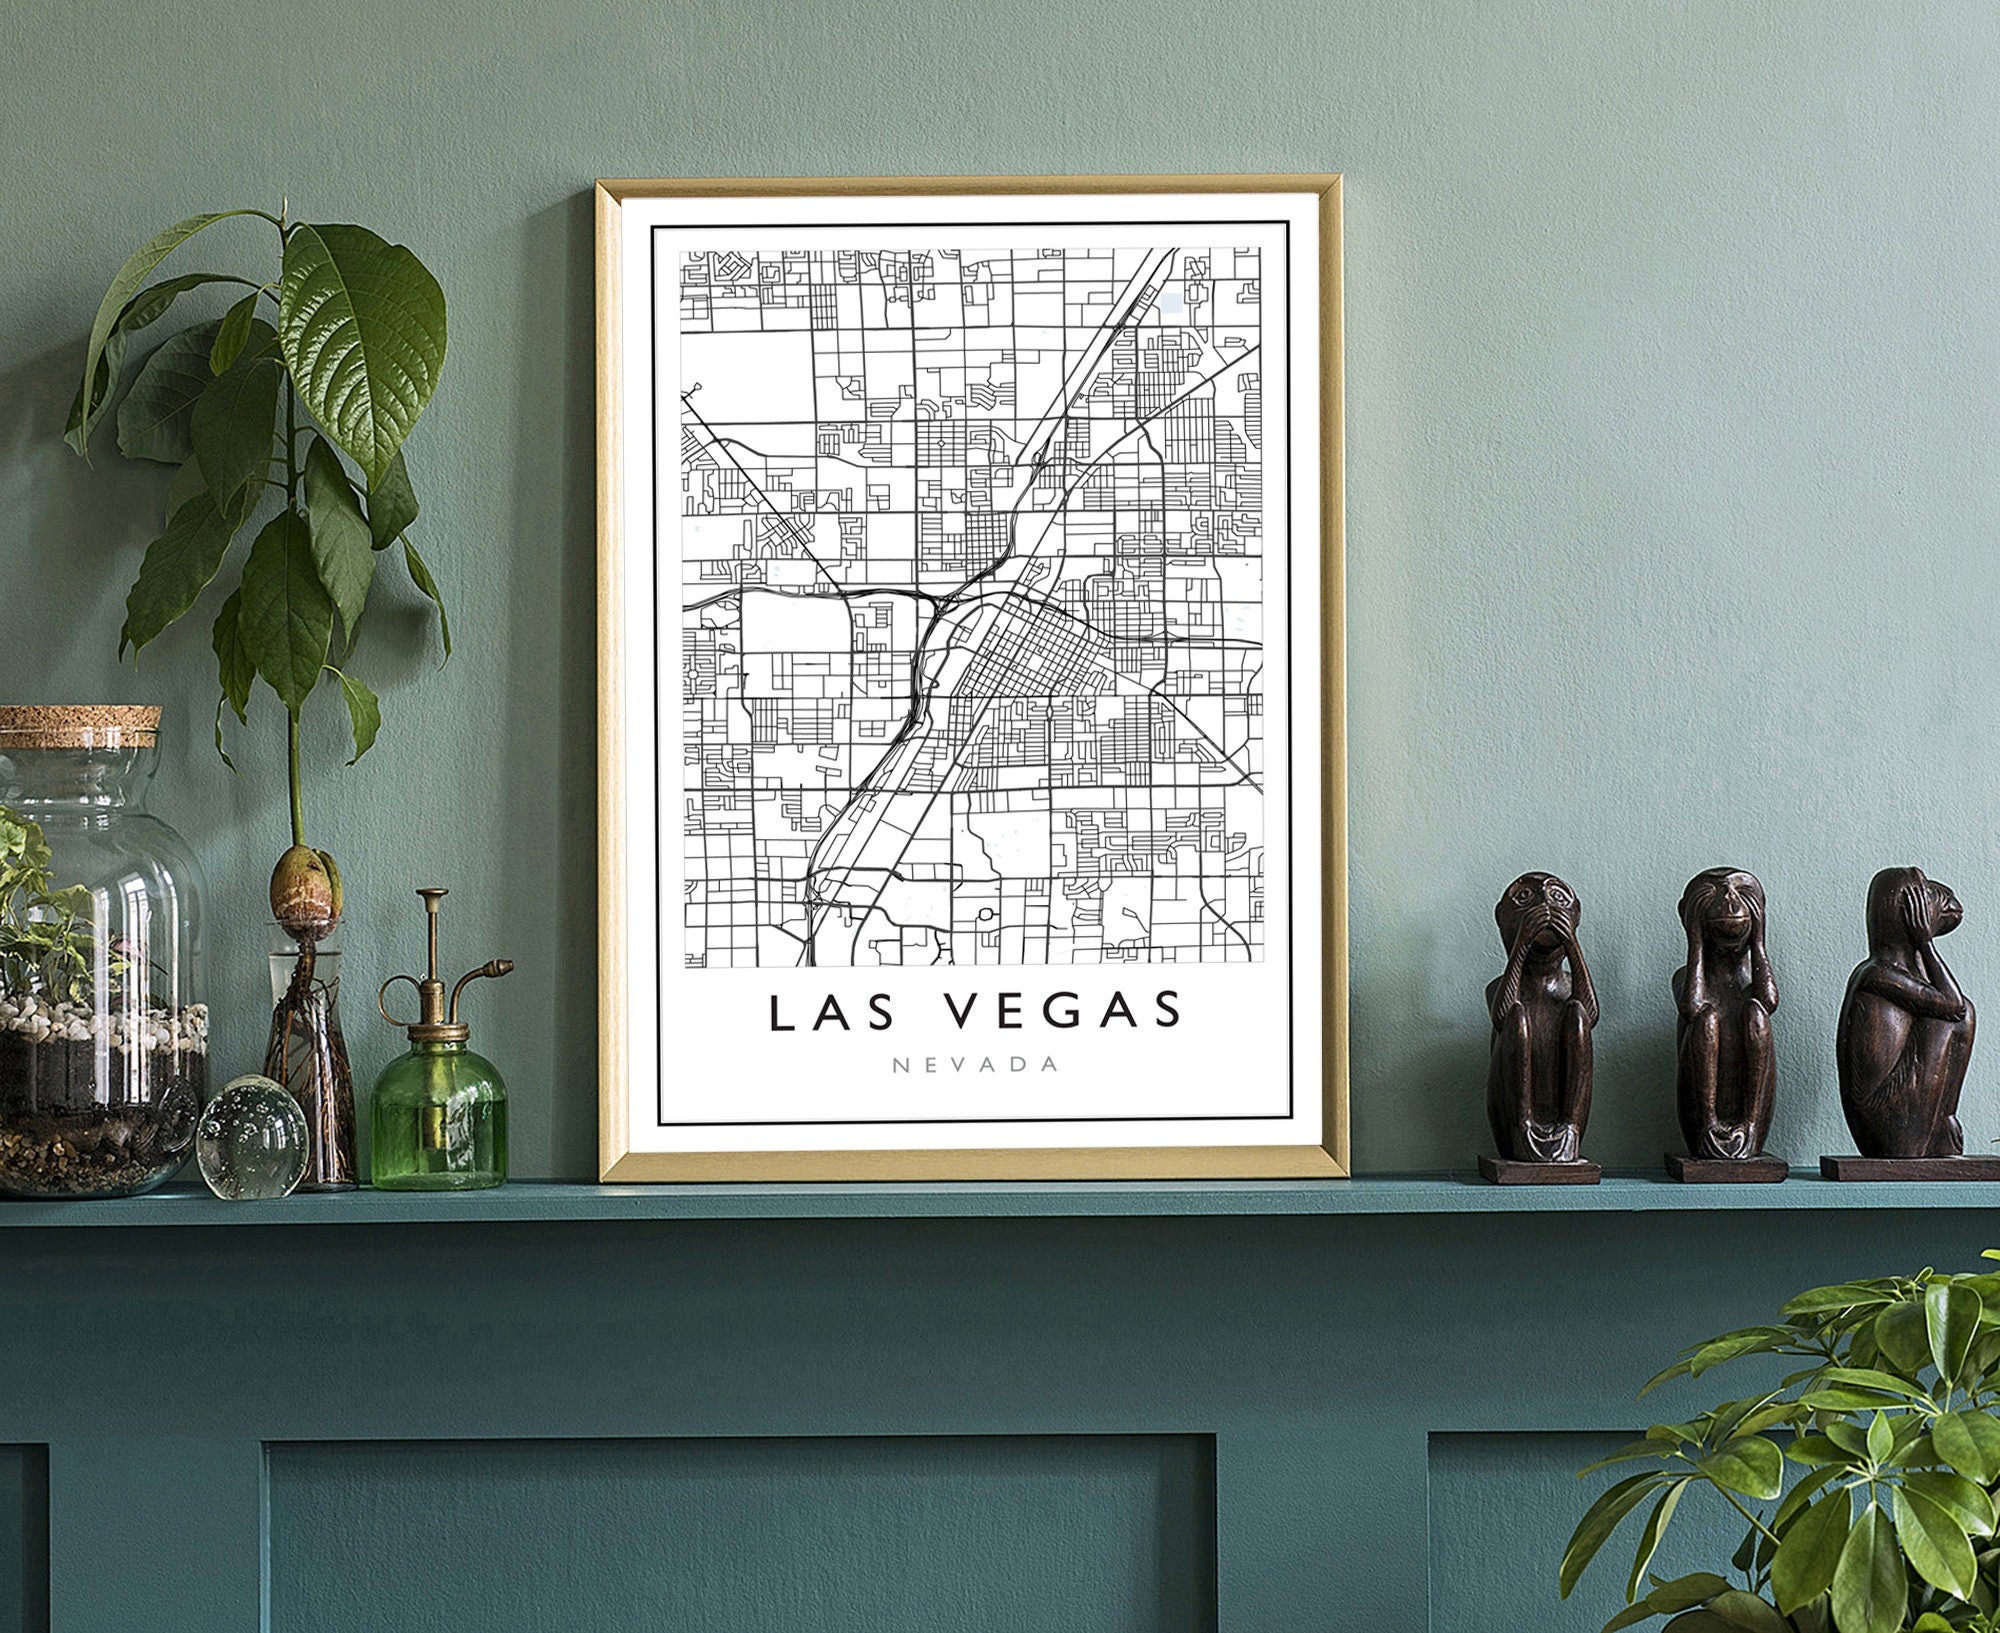 Las Vegas Nevada City Map, Las Vegas Nevada Road Map Poster, City Street Map Print, US City Modern City Map, Home Office Wall Decoration